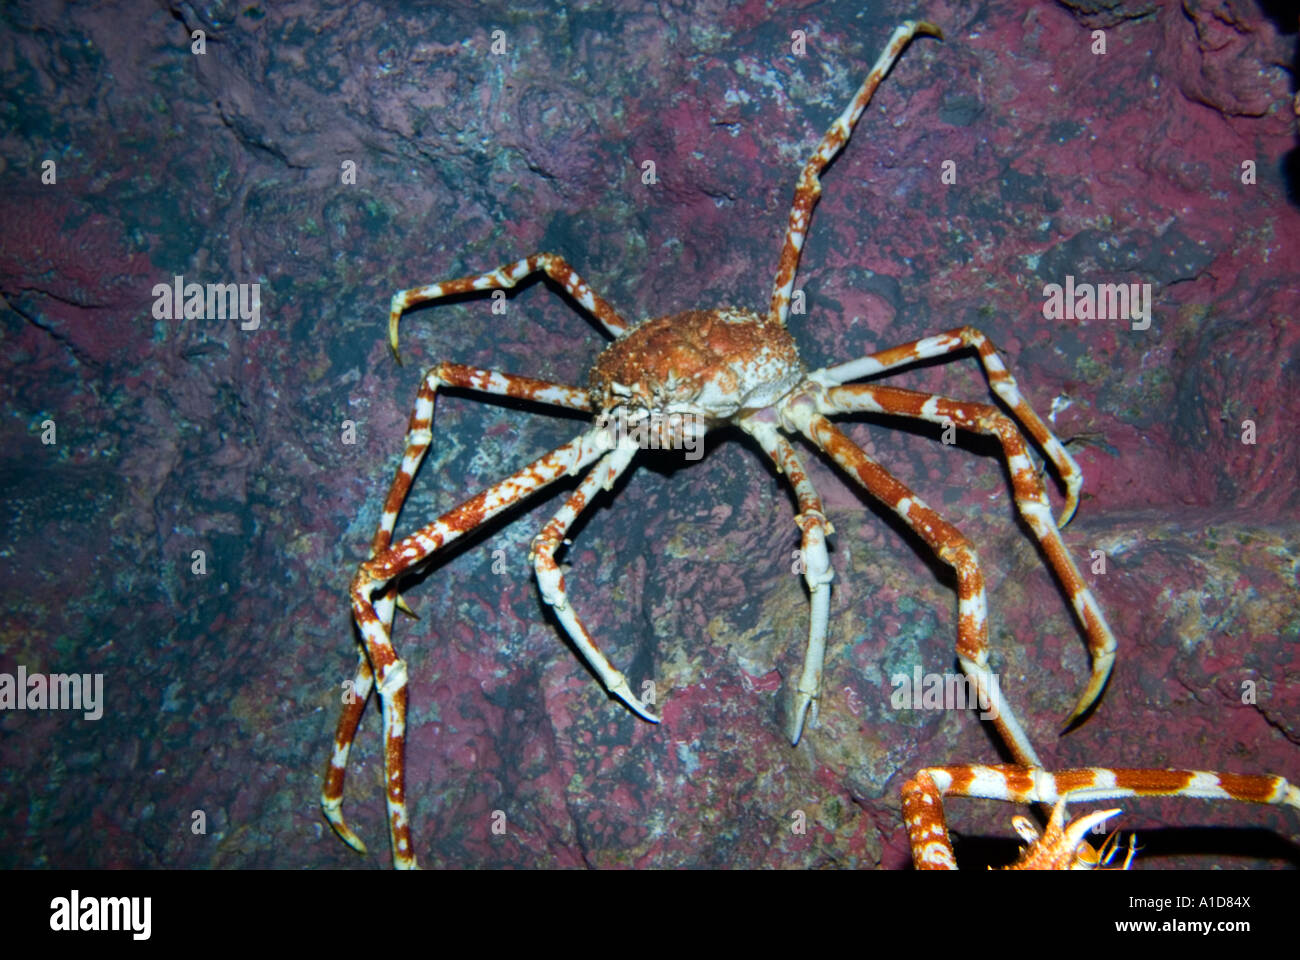 Die größte Krabbe lebendig GIANT SPIDER greifen Macrocheira Kaempferi japanische Japan PACIFIC OCEAN SEA Stockfoto